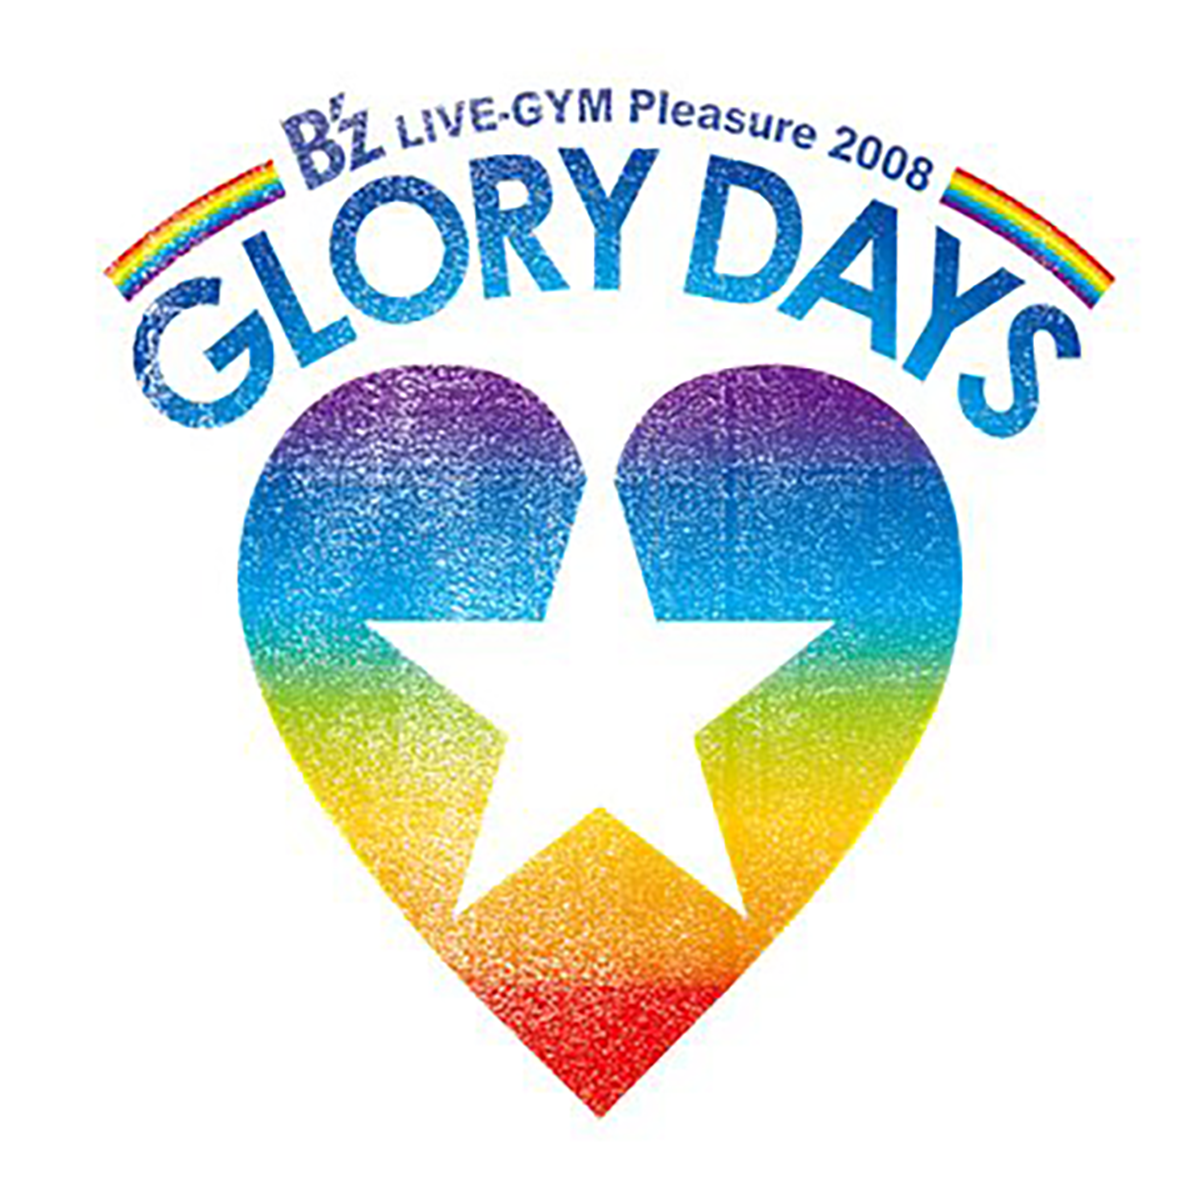 『B'z LIVE-GYM Pleasure 2008 -GLORY DAYS-』のツアーロゴ